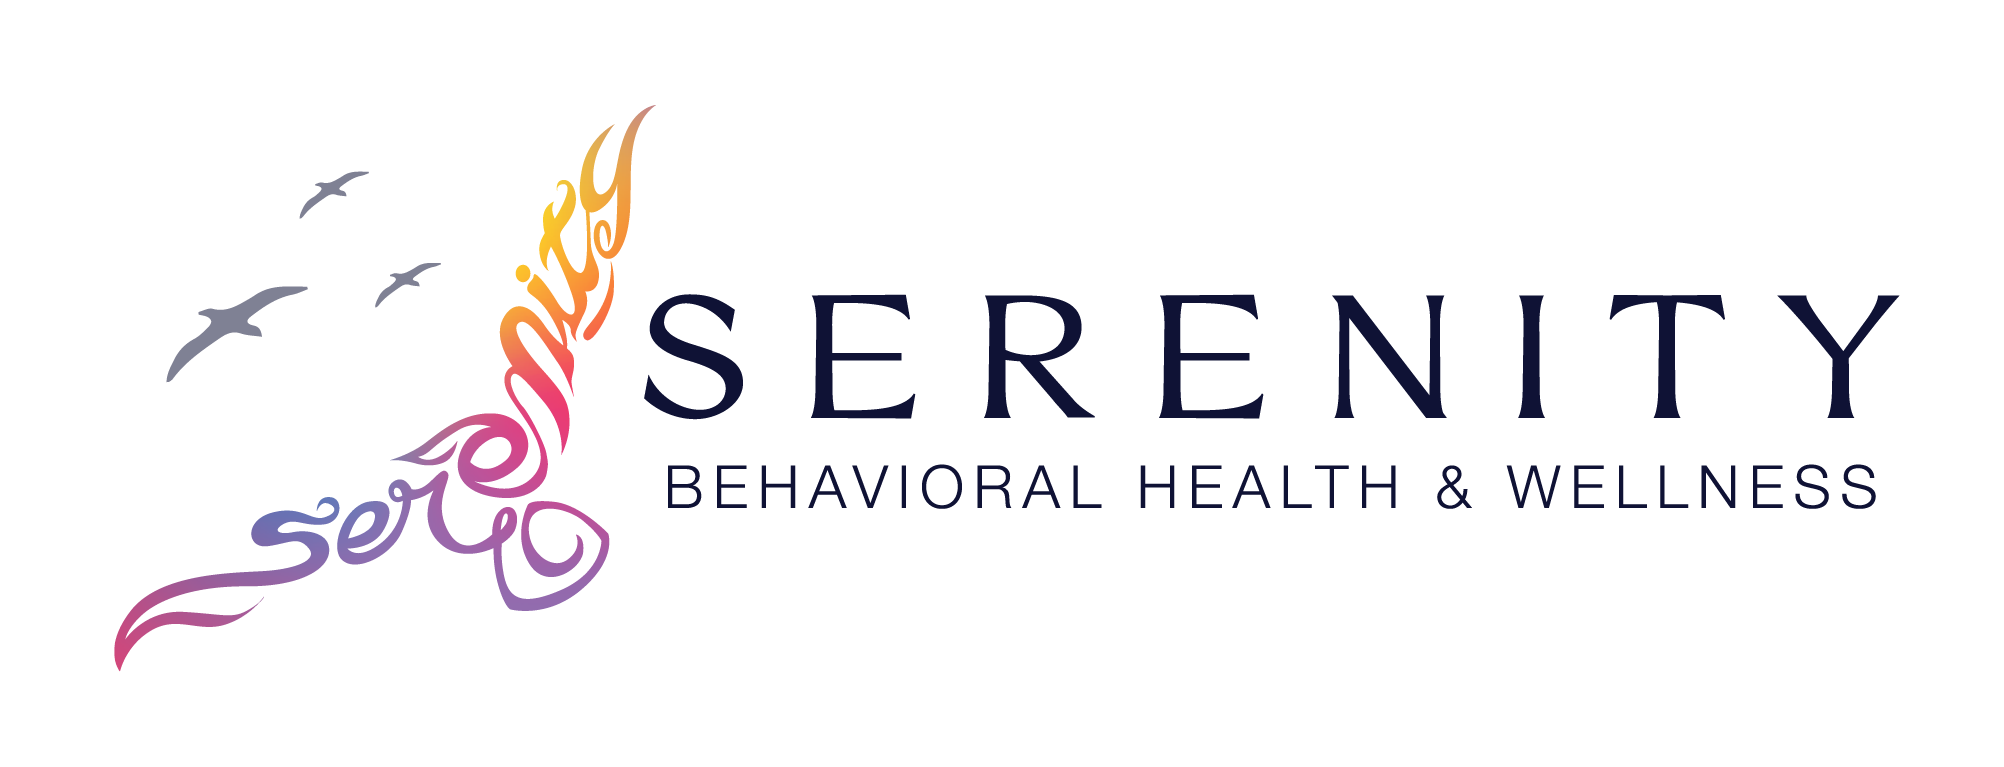 Serenity Behavioral Health & Wellness logo